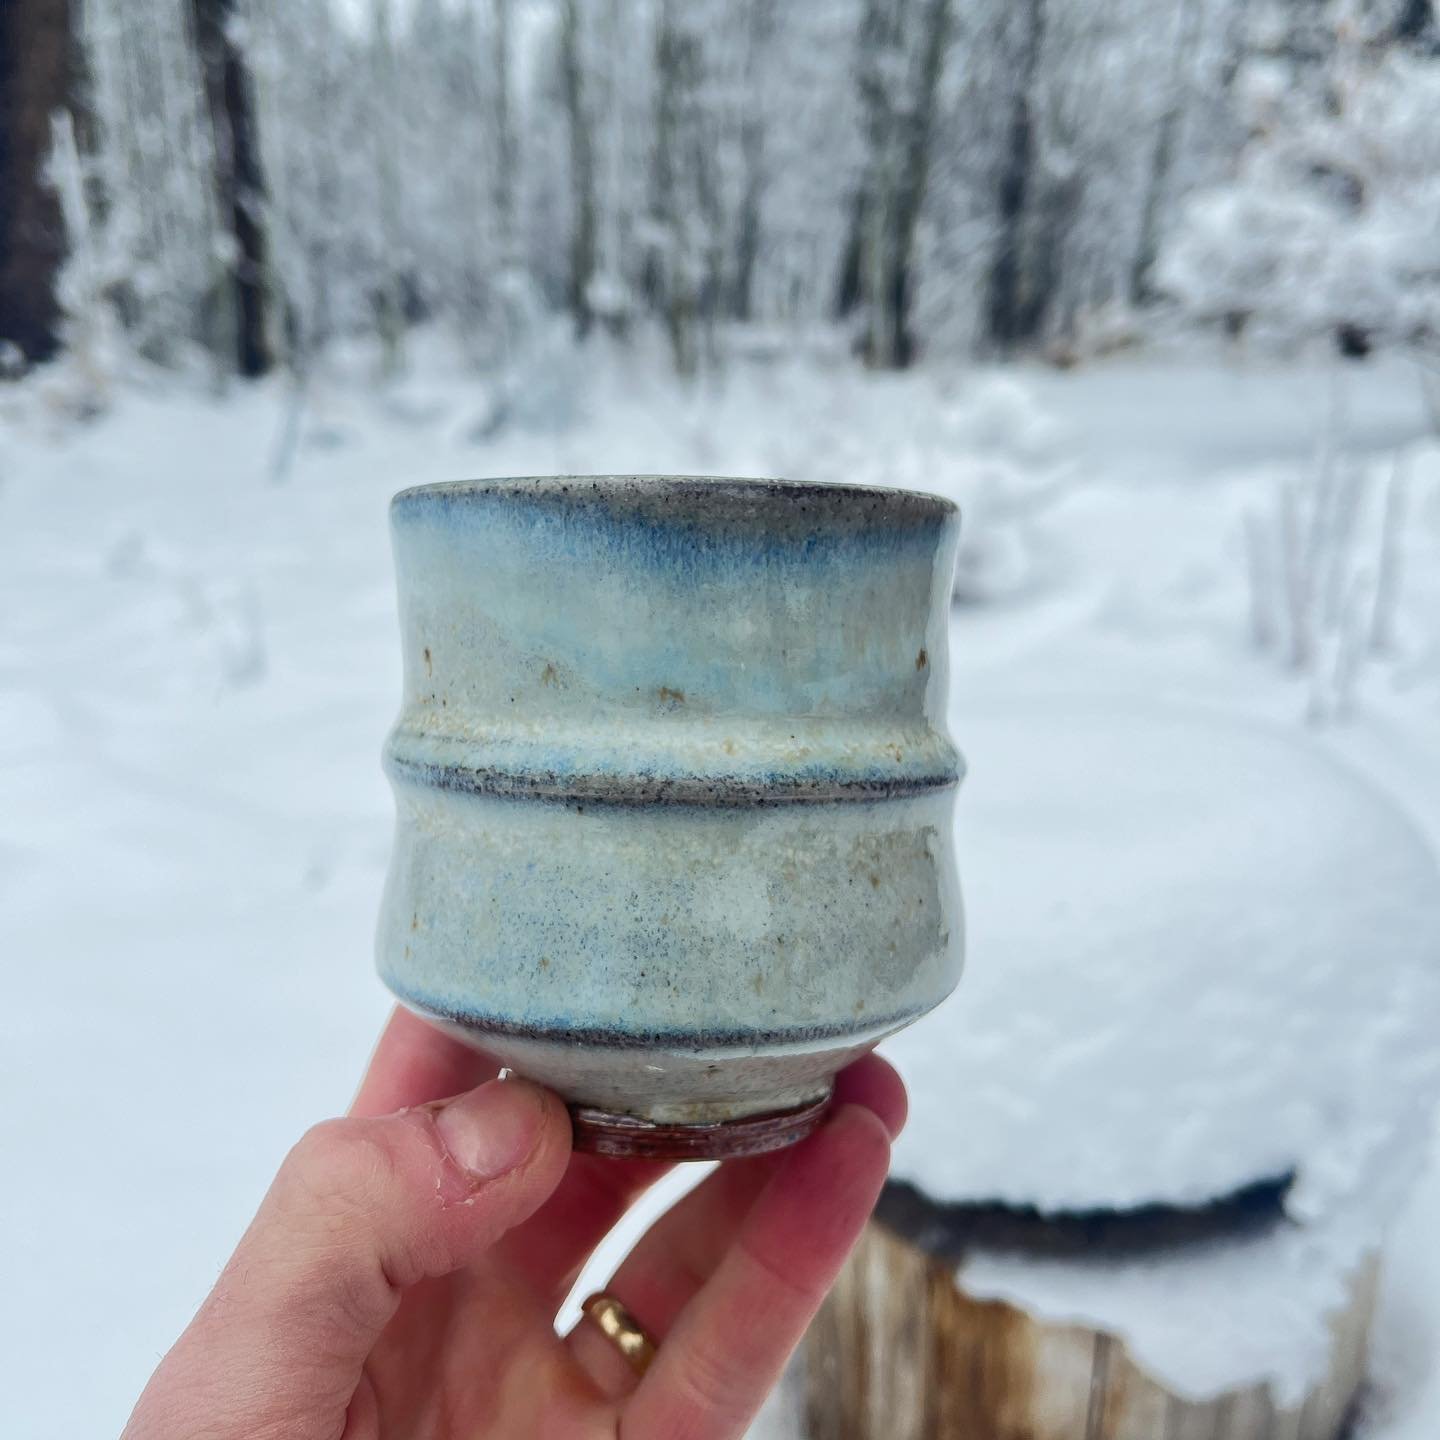 May 8, 8+ inches of snow at our place 🙃

#pottery #ceramics #stoneware #woodfiredceramics #woodfiredpottery #woodashglaze #ashglaze #nuka #contemporaryceramics #potspotspots #potteryismyfavoritesport #neverendingwinter